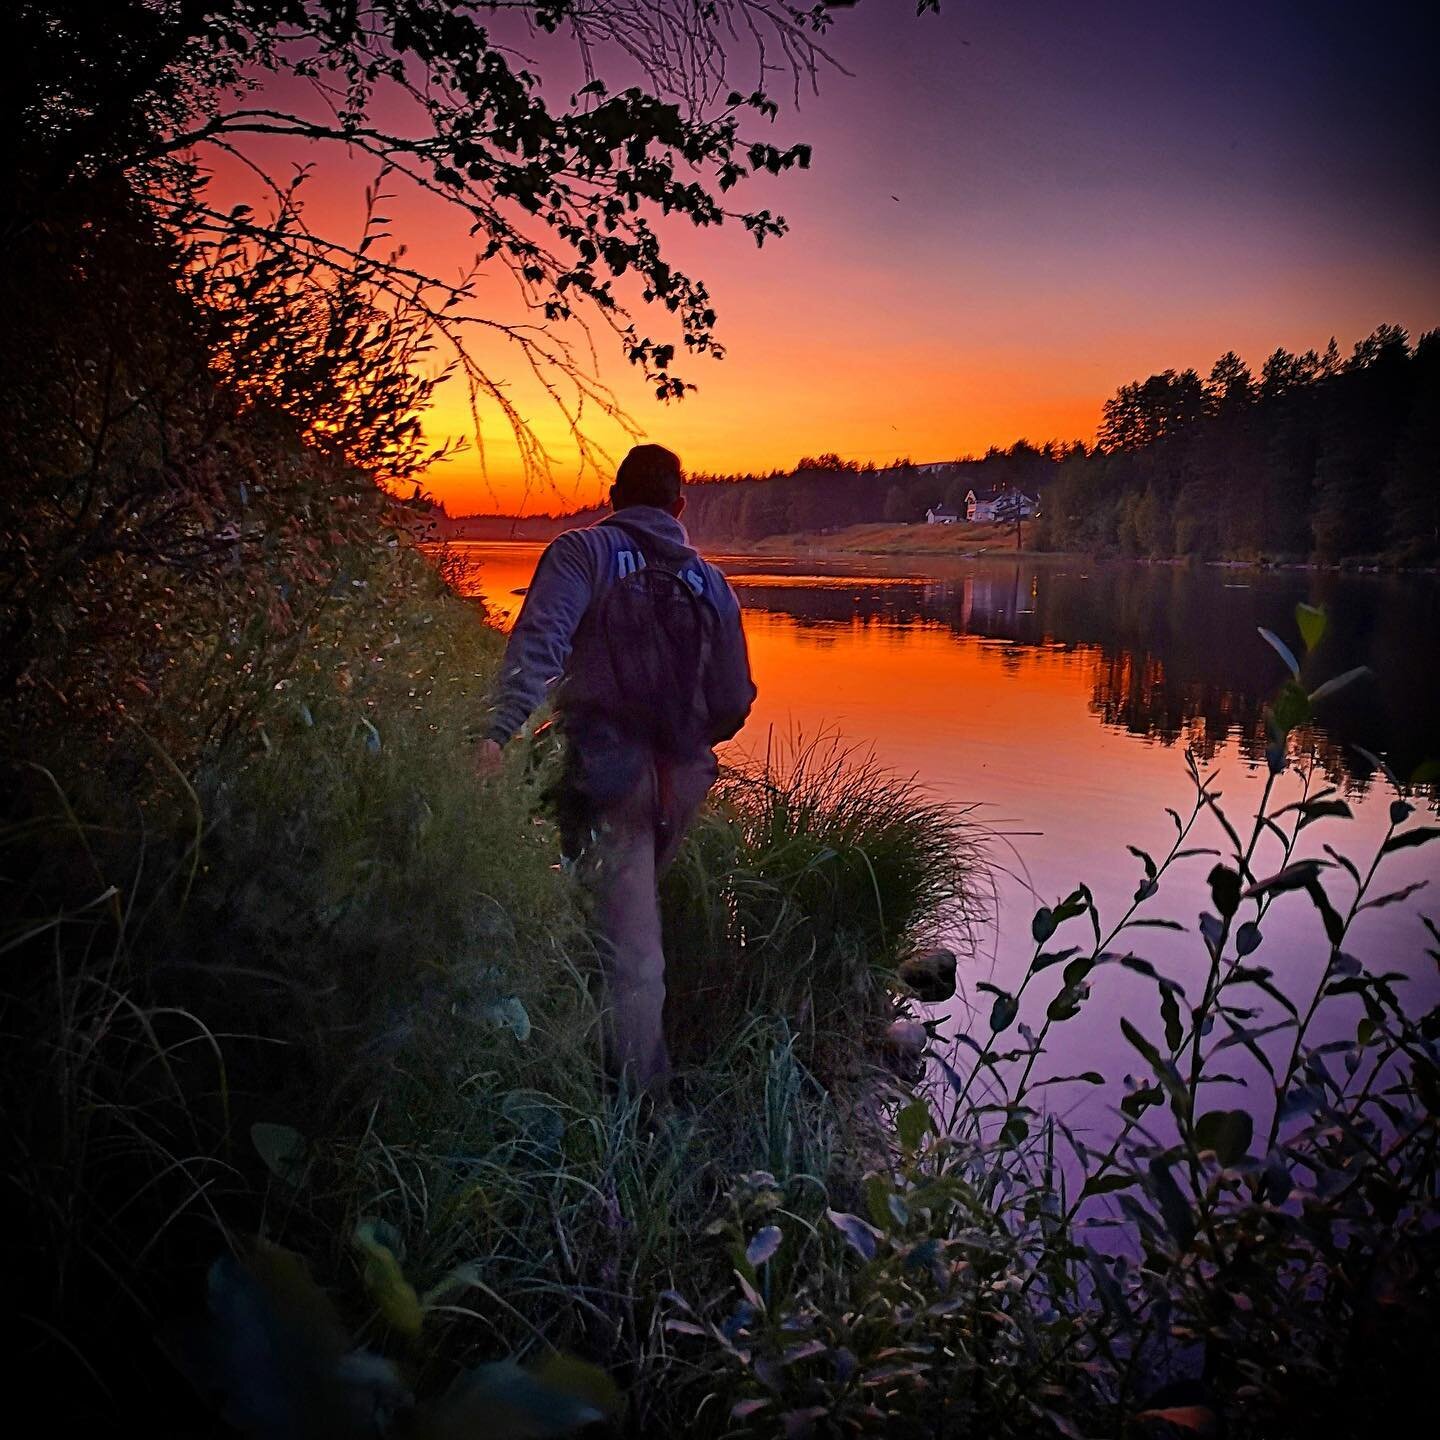 Warmer days are not far away. 
📸 @christoffer.gaarder #flyfishing #fluefiske #nature #norway #renafishcamp #utno #renaelva #fishing #renafiskecamp